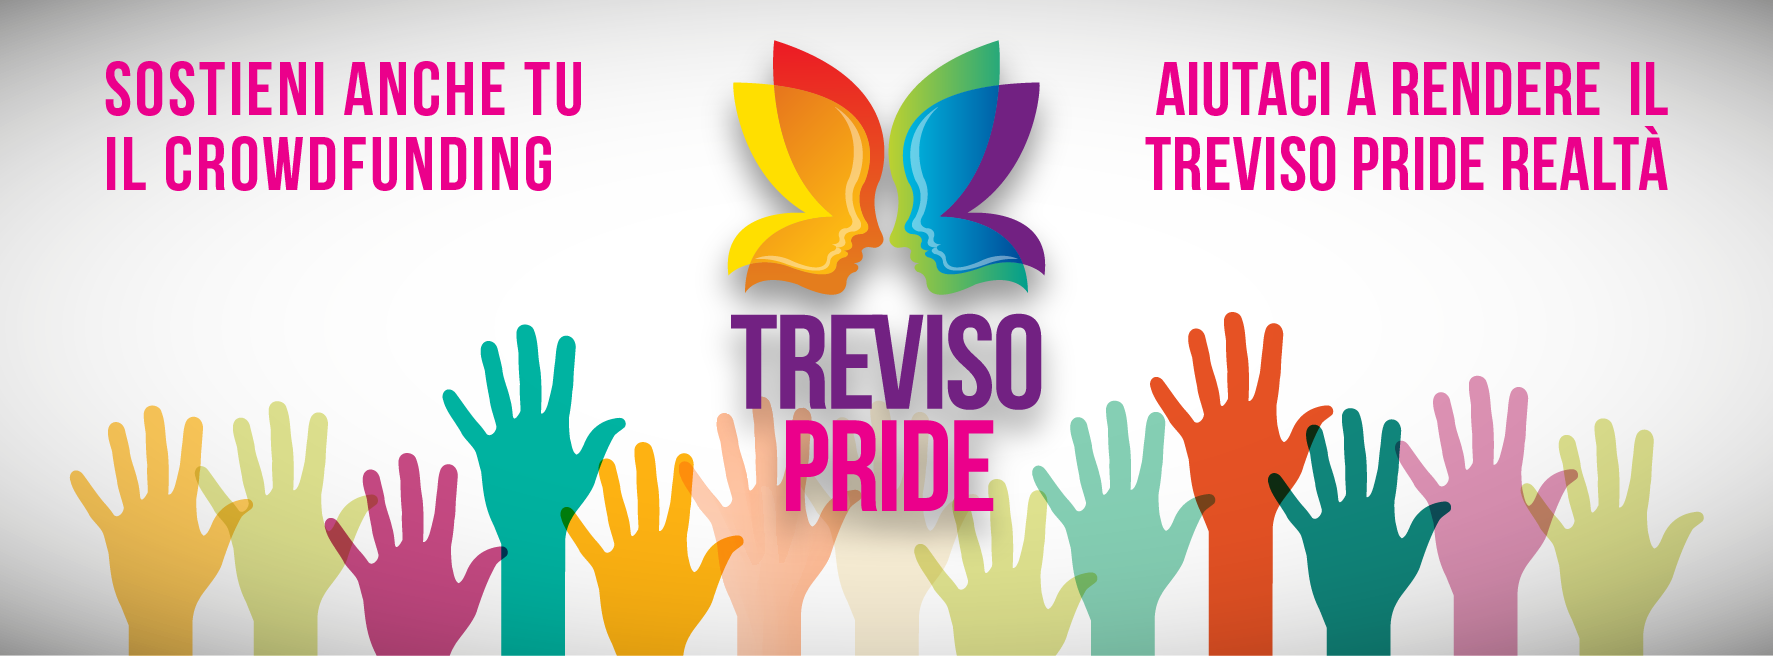 Treviso Pride 2016